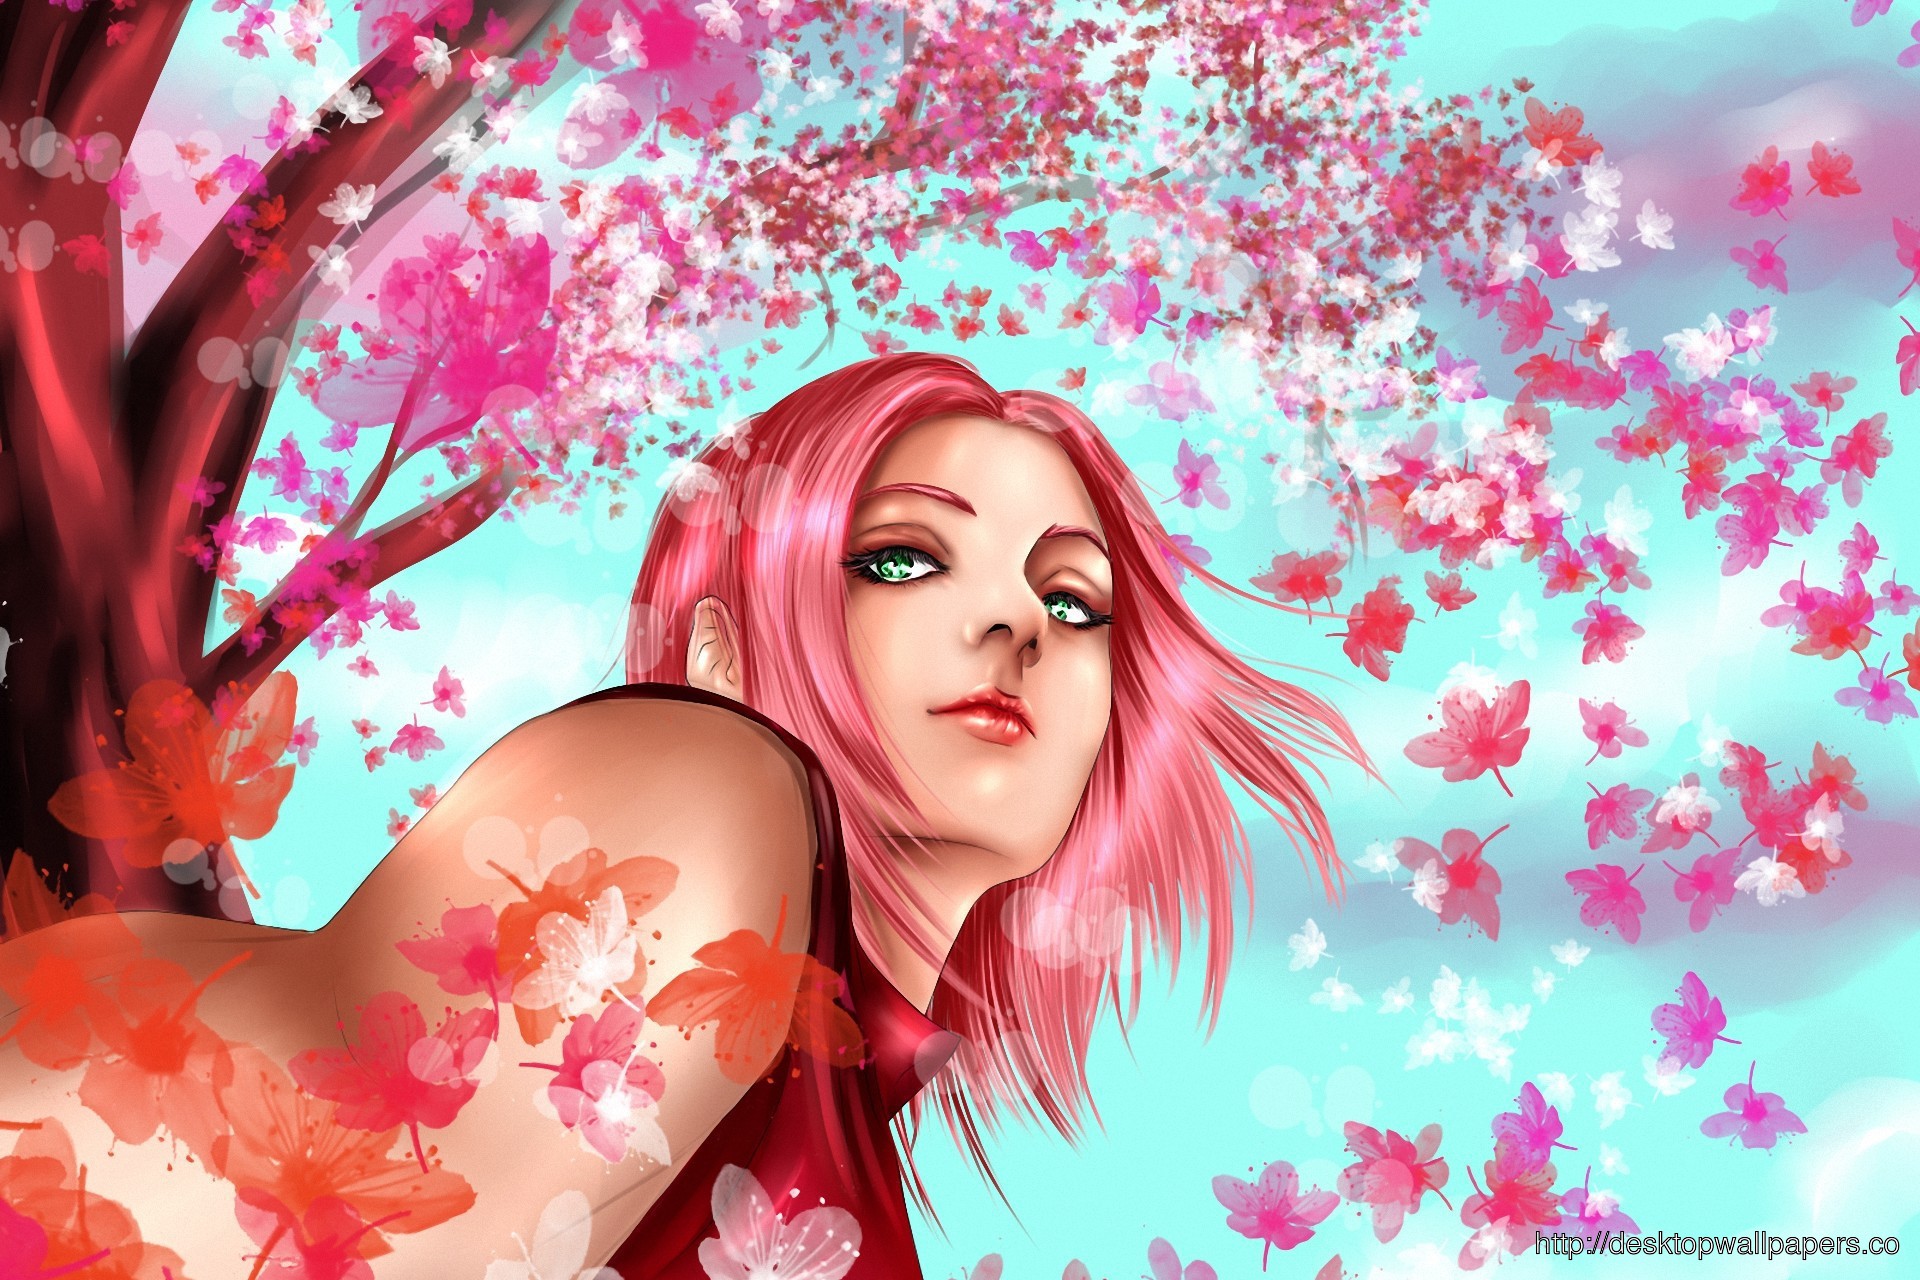 fond d'écran sakura haruno,rose,beauté,oeuvre de cg,illustration,printemps